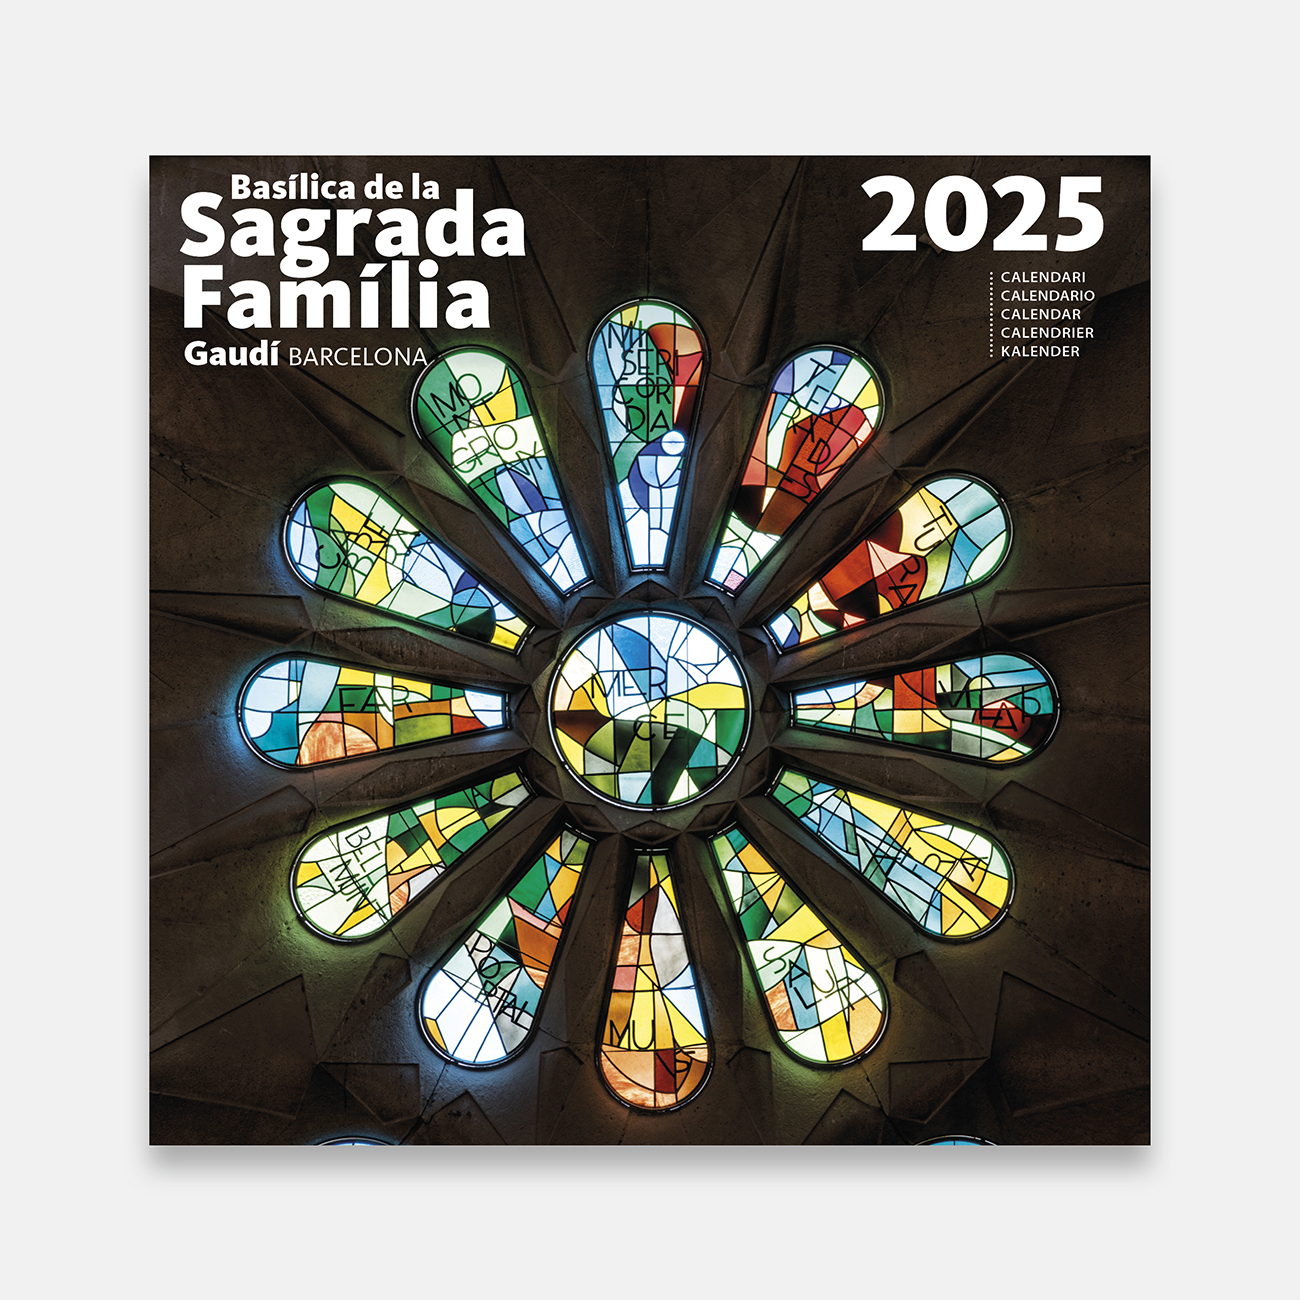 Calendrier 2025 Basílica de la Sagrada Família (Vitraux) 25sf2 calendario pared 2025 sagrada familia